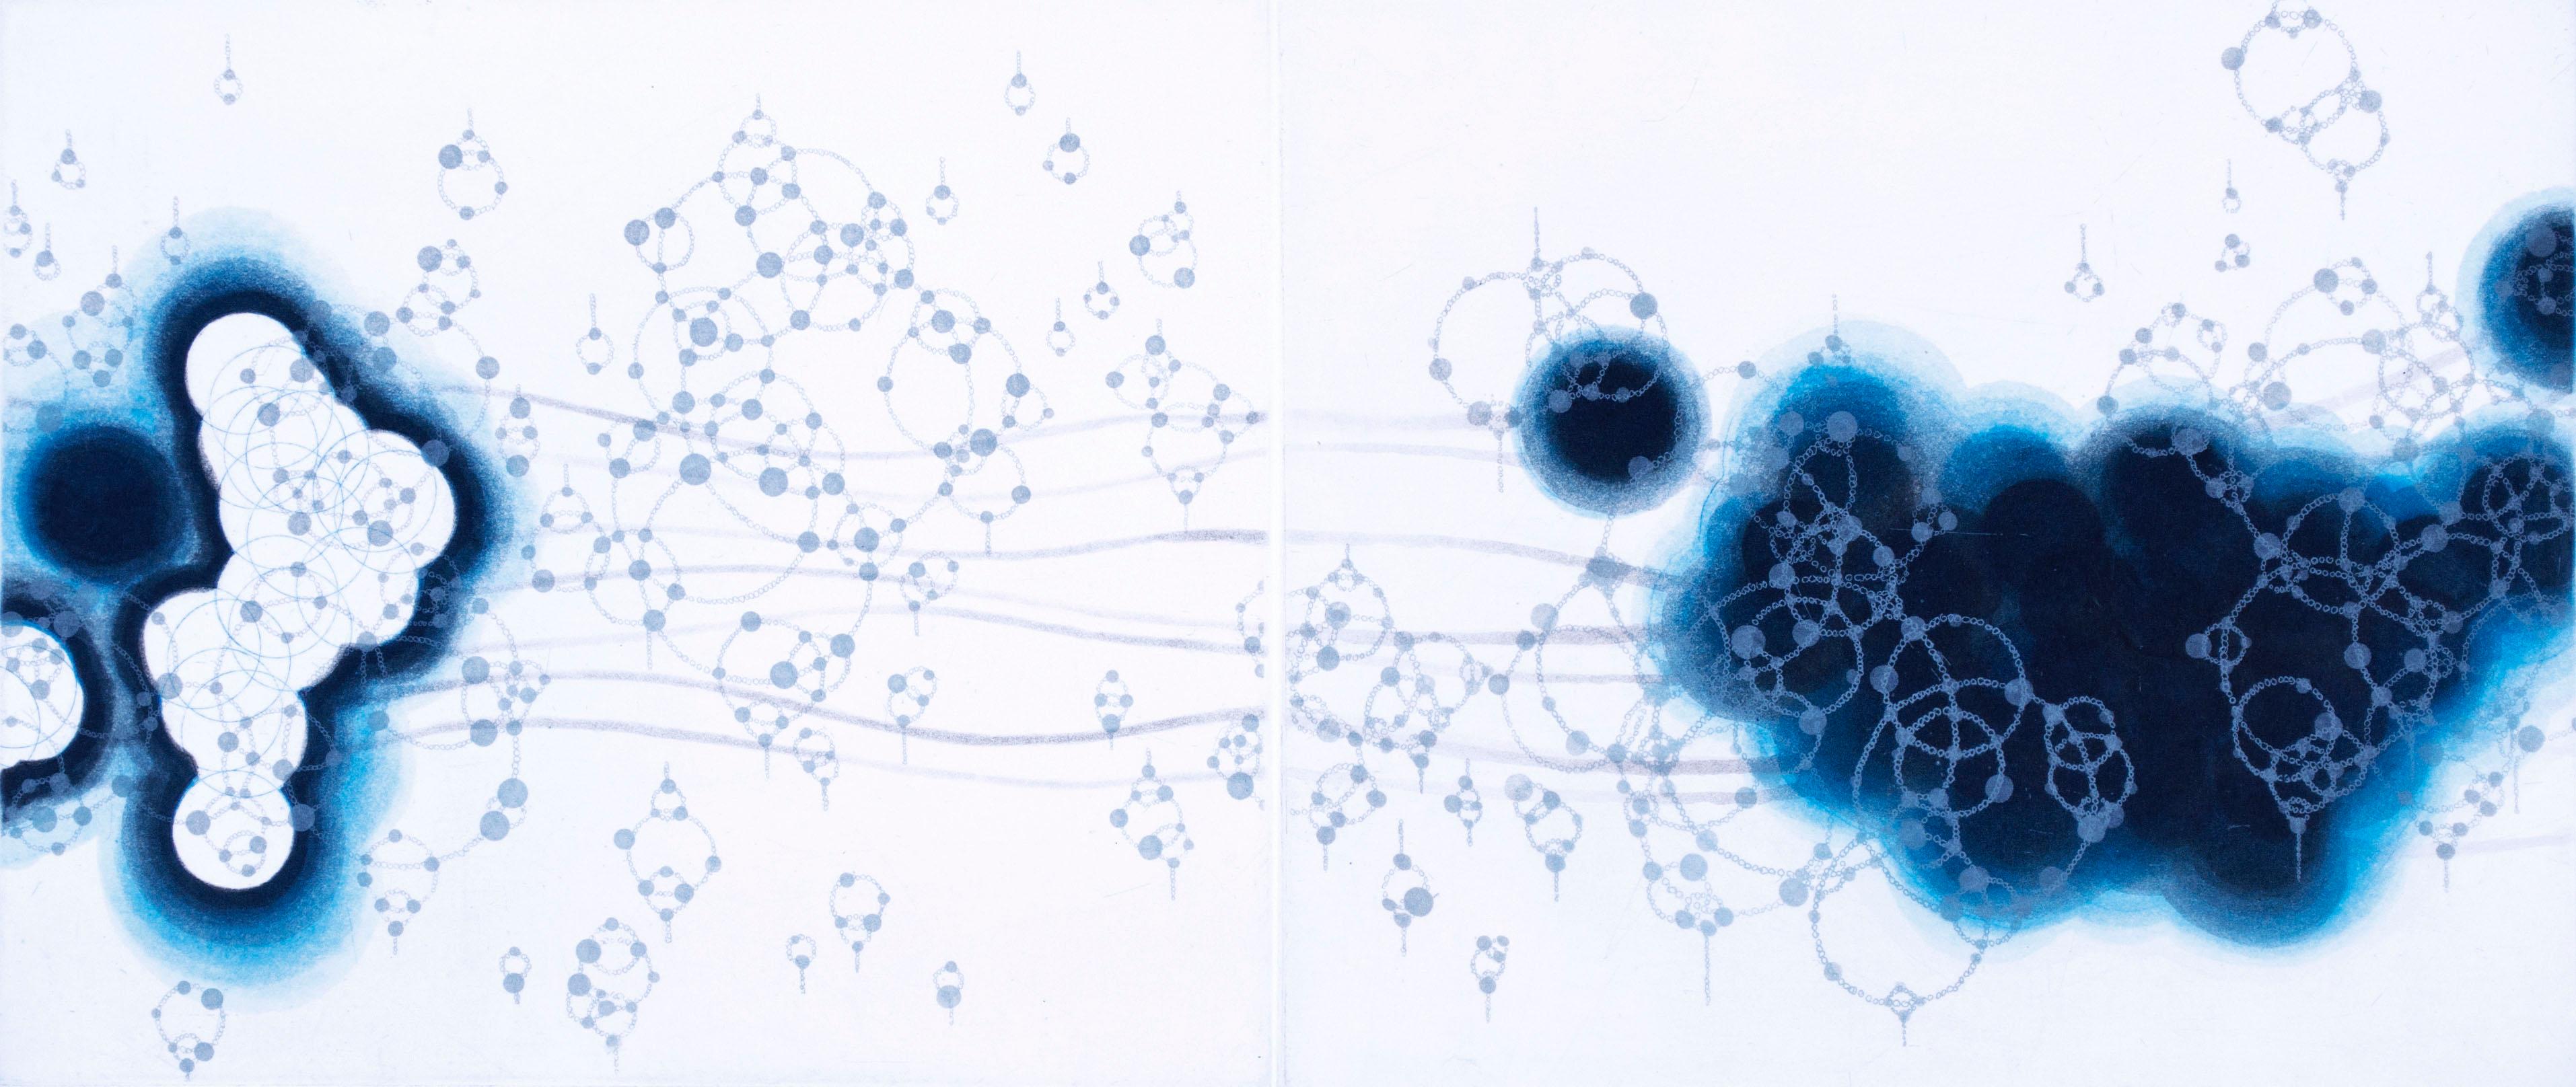 Seiko Tachibana Abstract Print - Origin-Blue Consonant-2